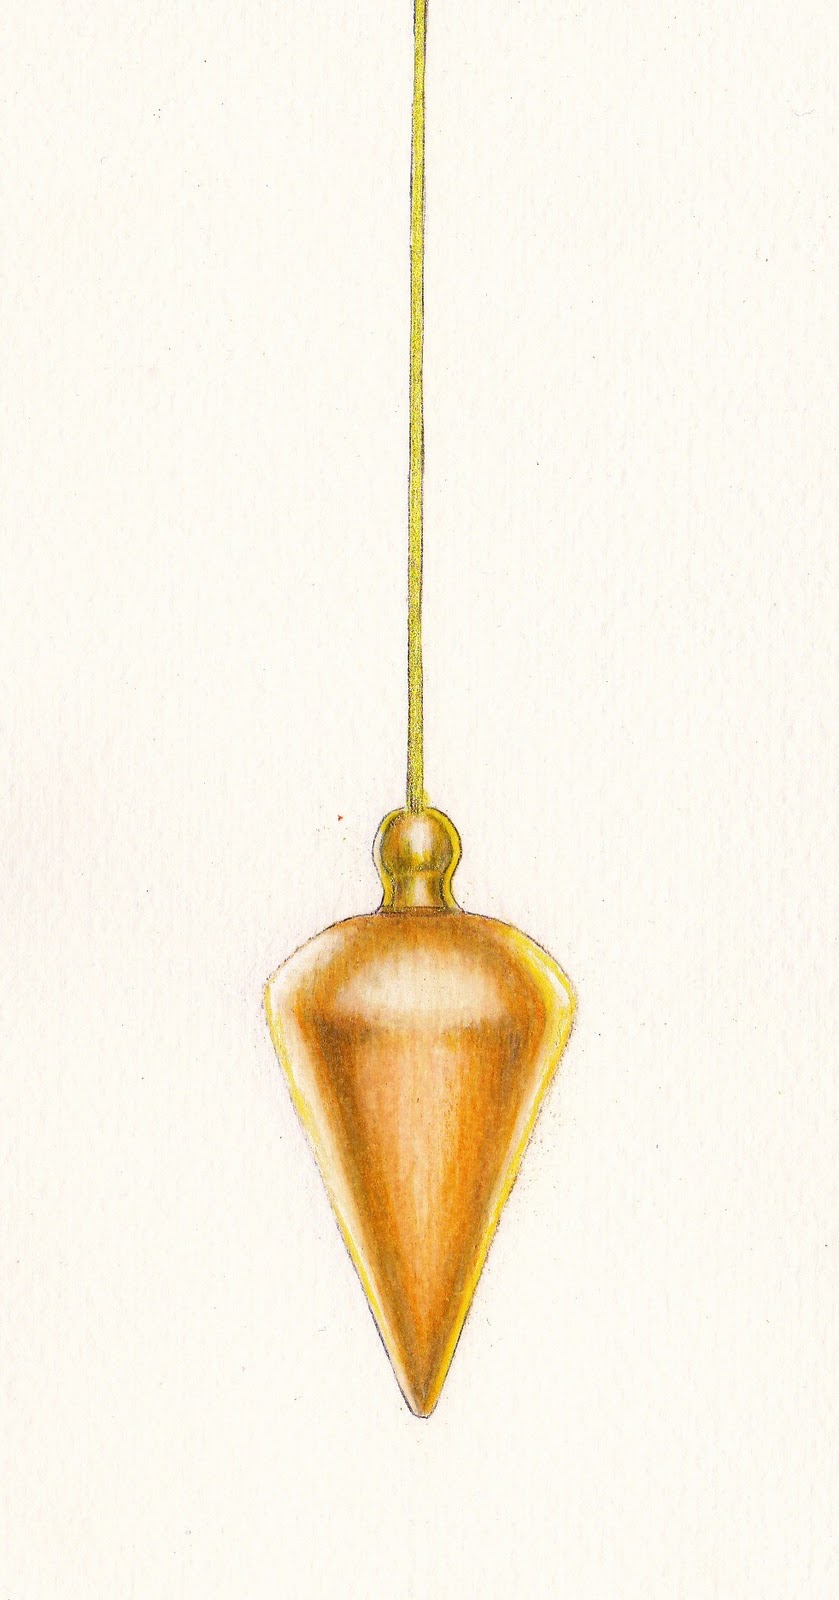 Pendulum Drawing at Explore collection of Pendulum